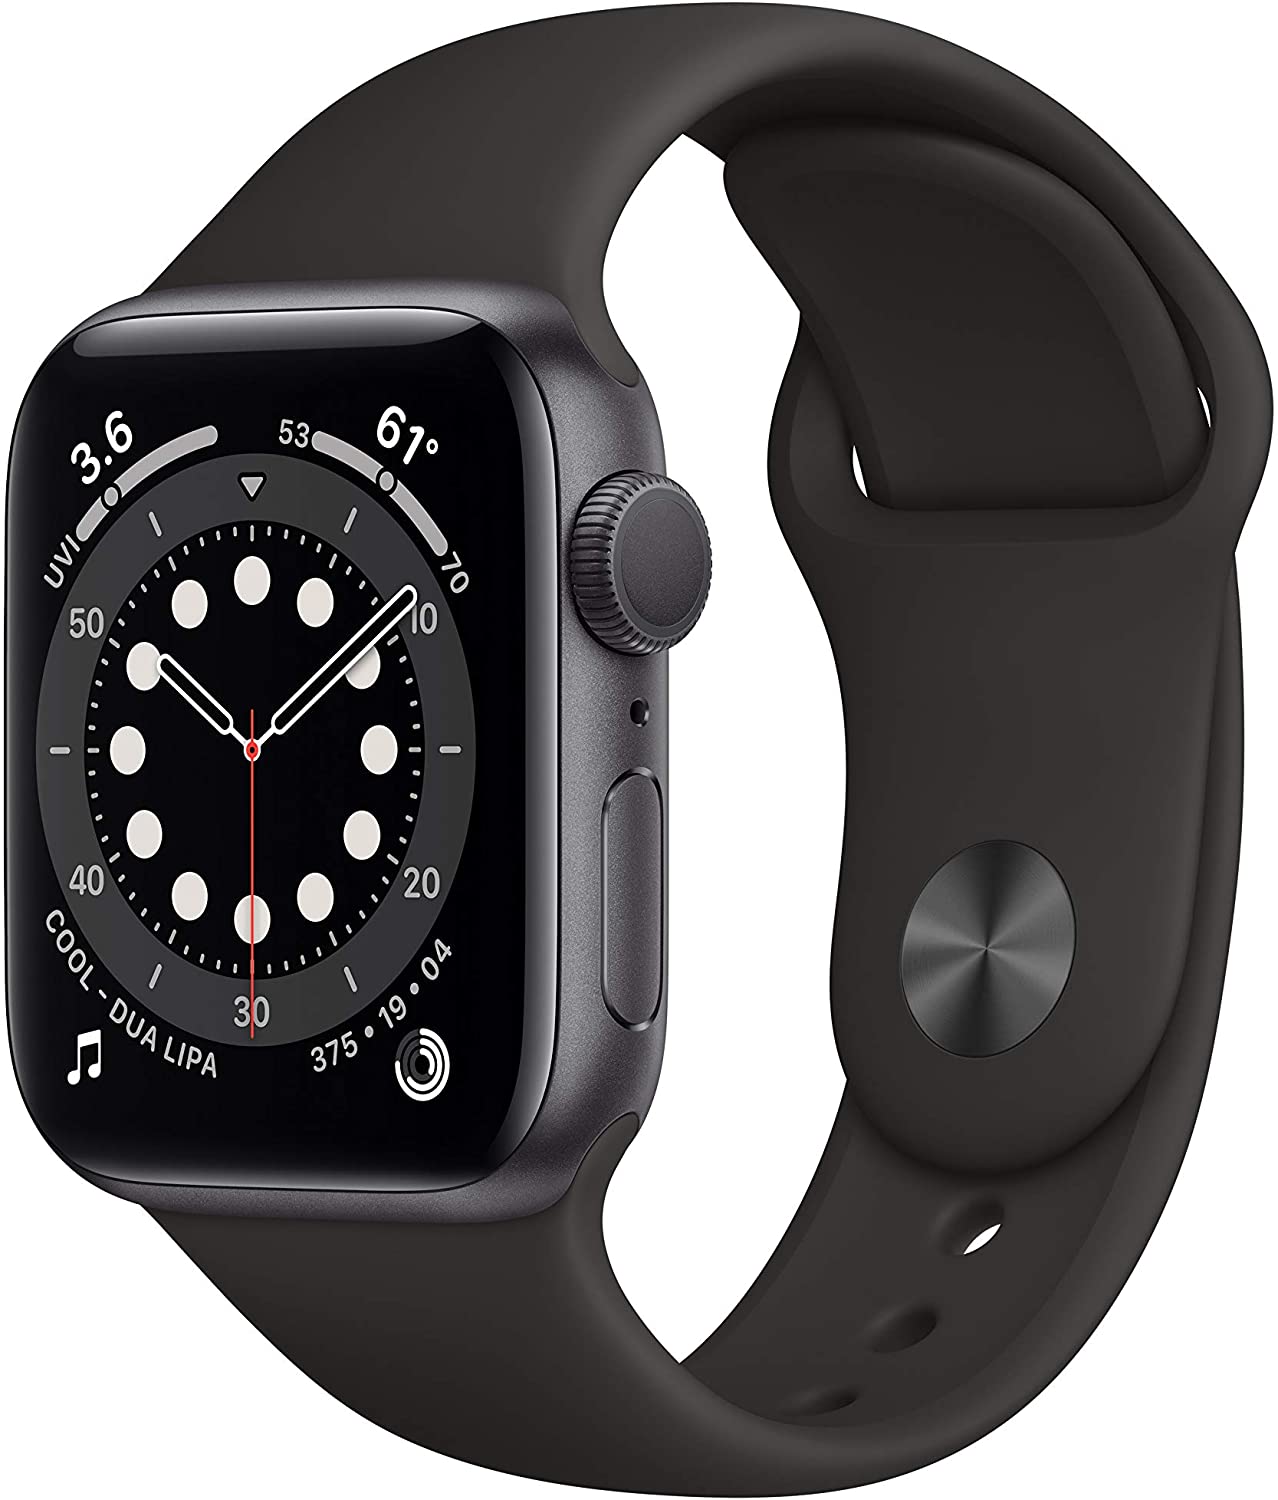 Apple Watch 6 Render Cropped